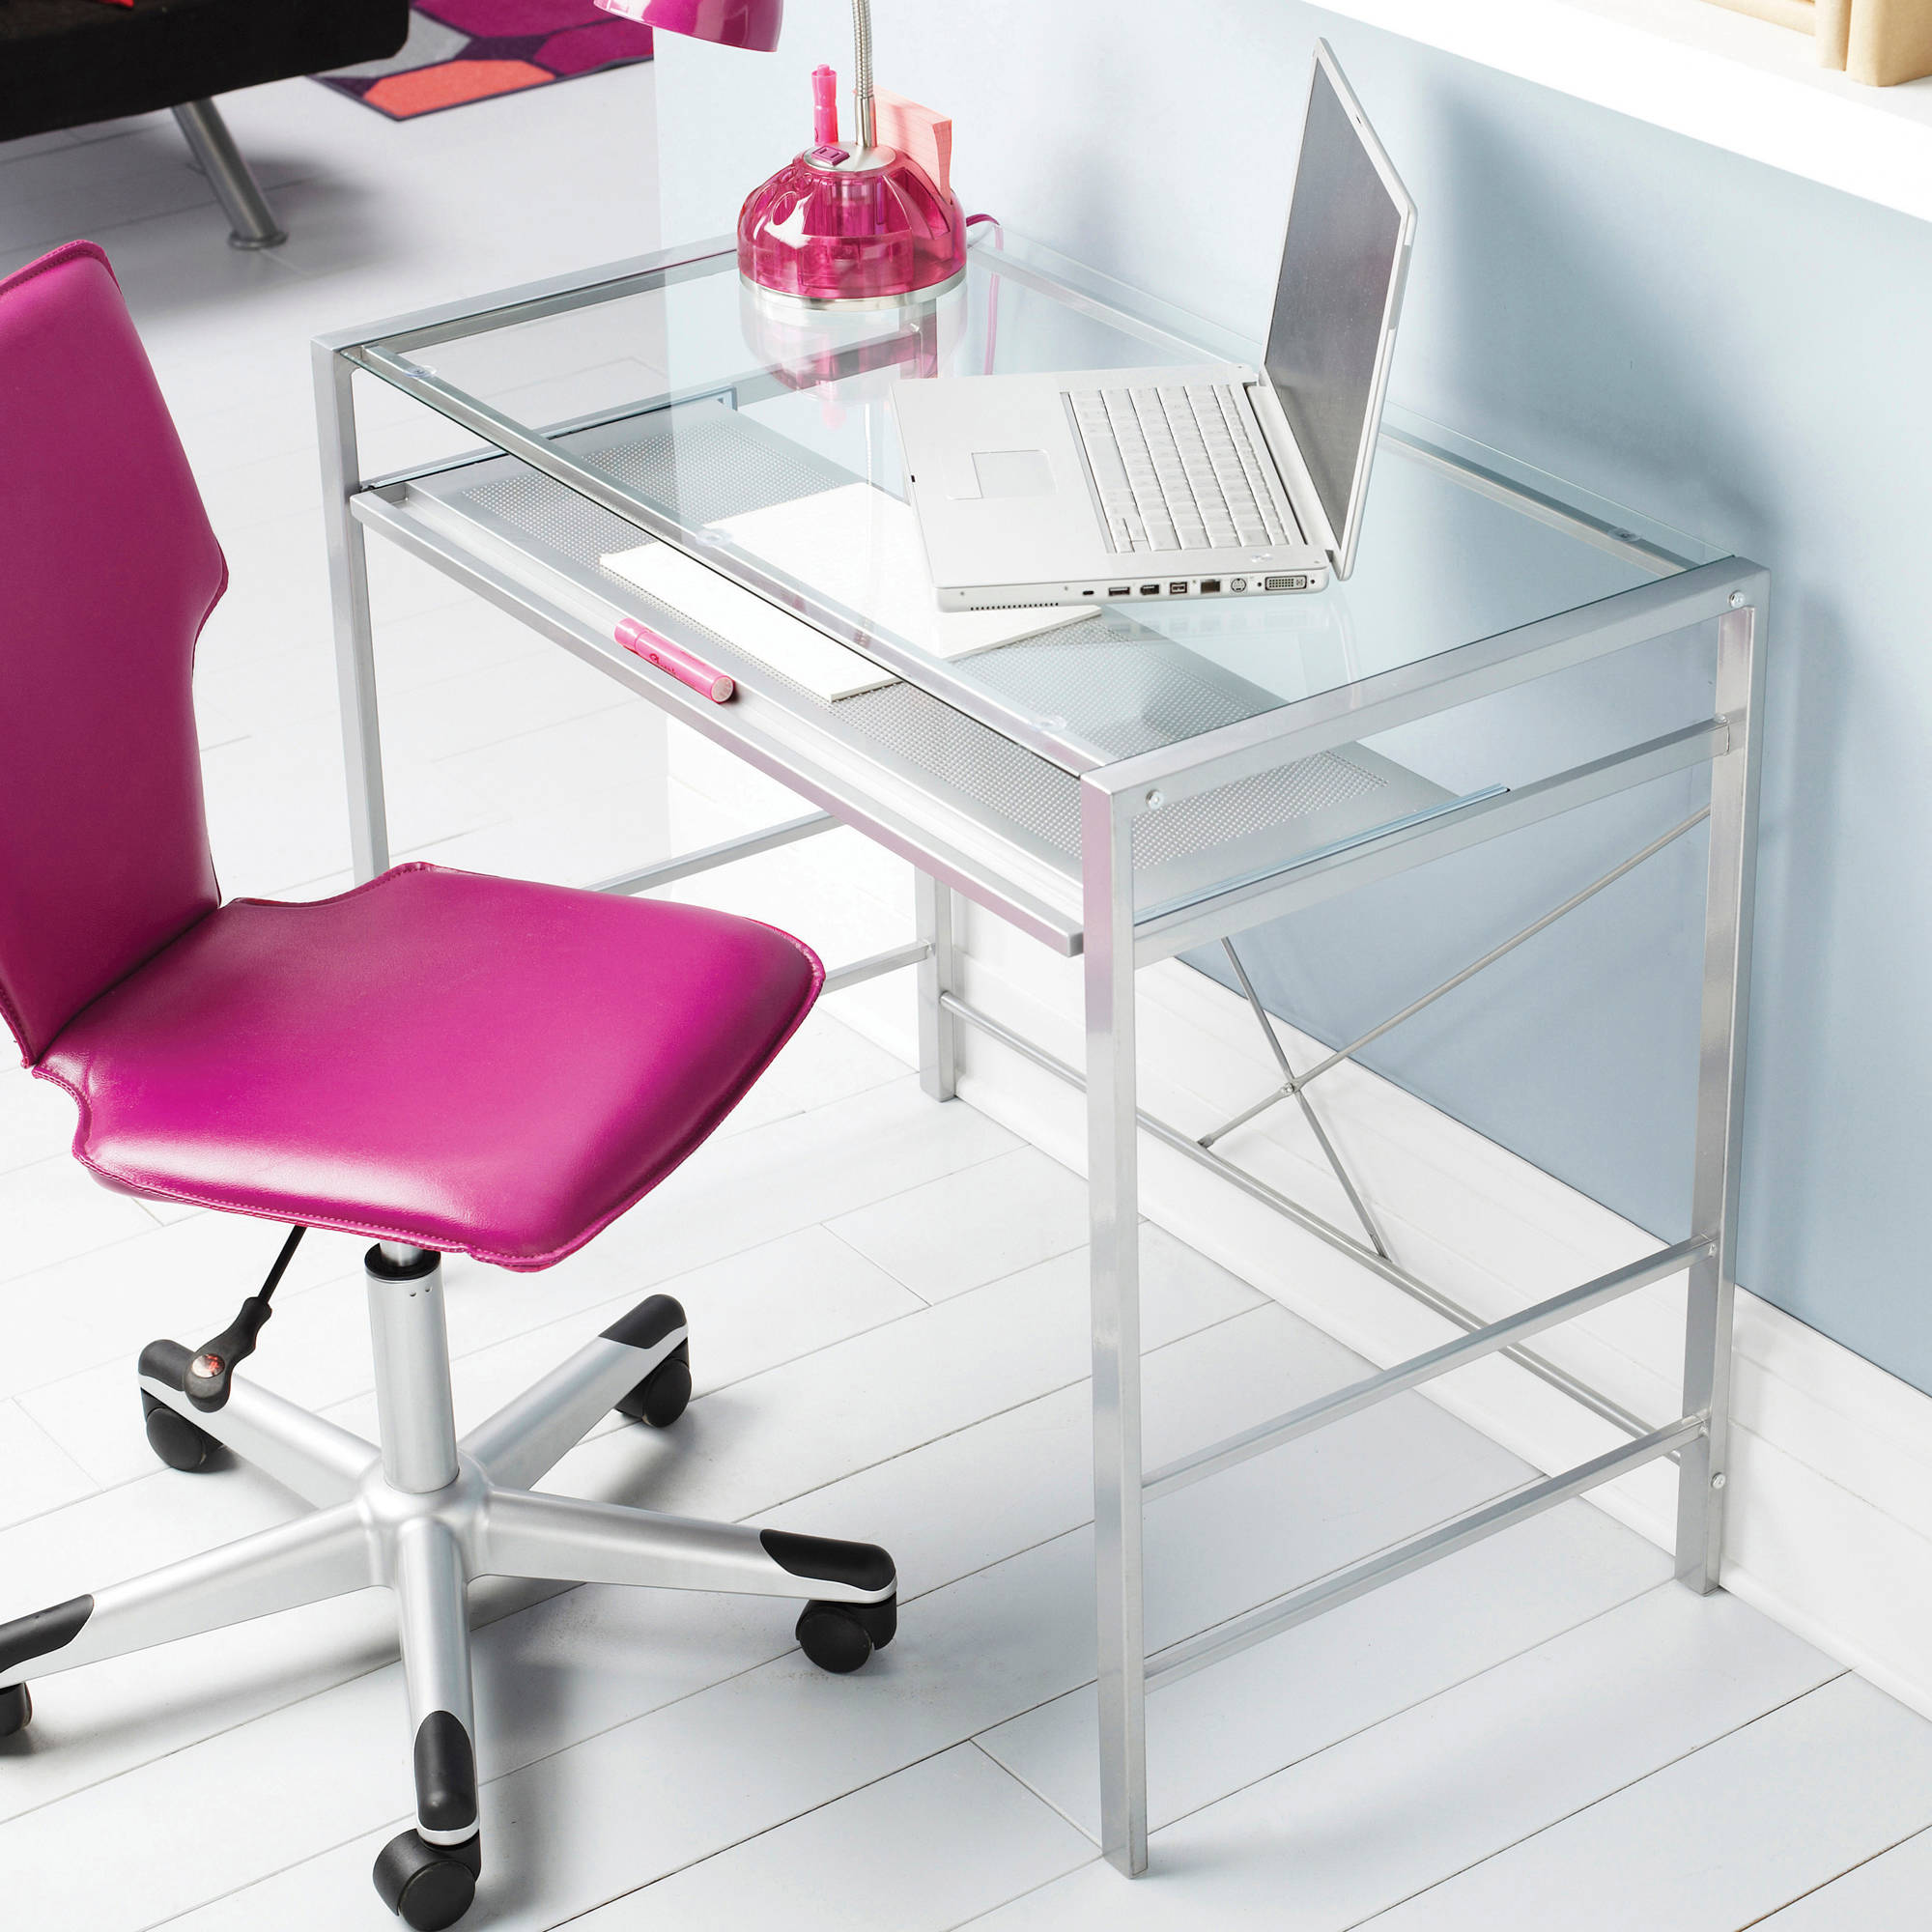 Mainstays Versatile Modern Glass-Top Desk, Multiple Colors - image 1 of 2